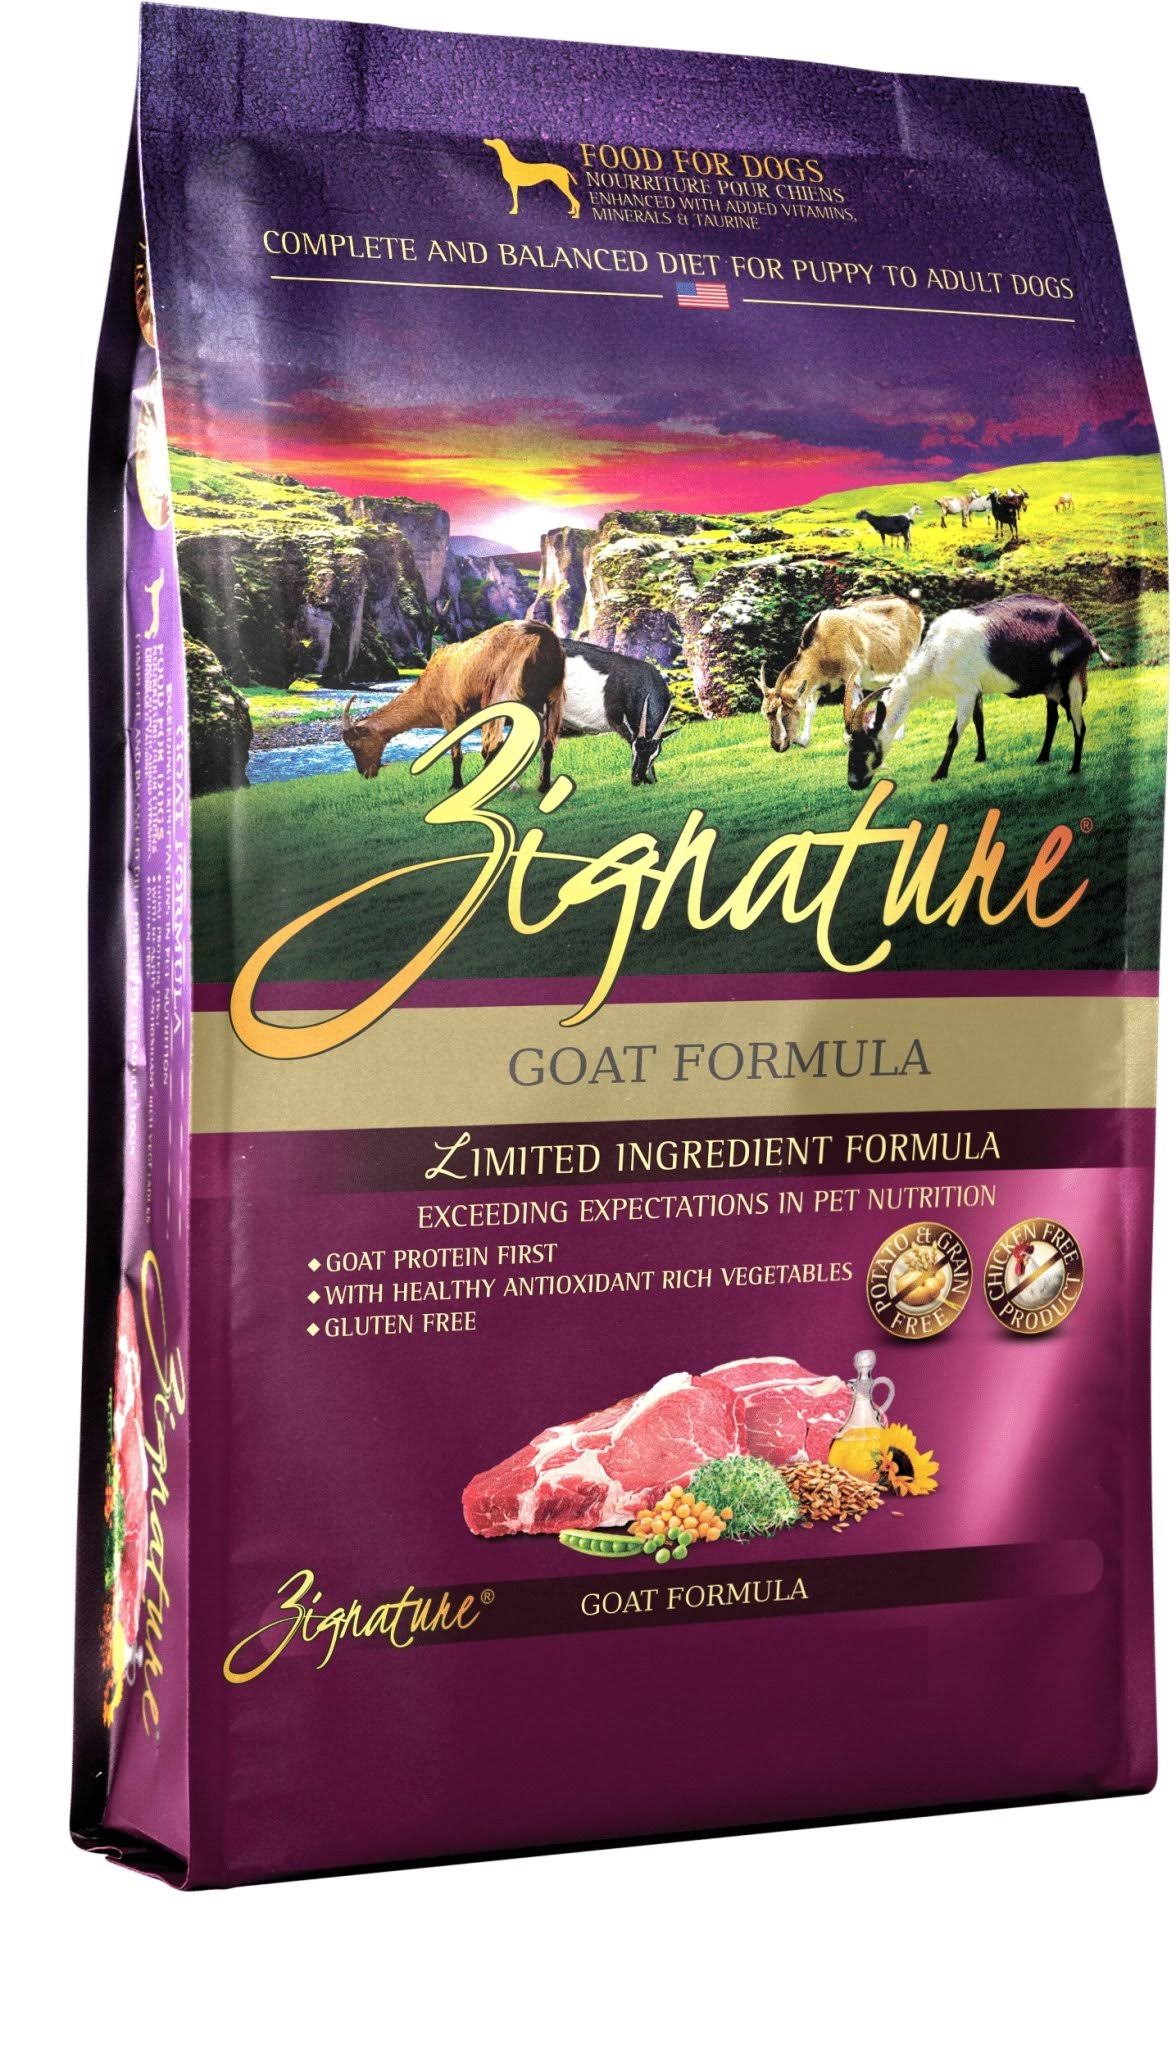 Goat Limited Ingredient Formula - Dry Dog Food - Zignature